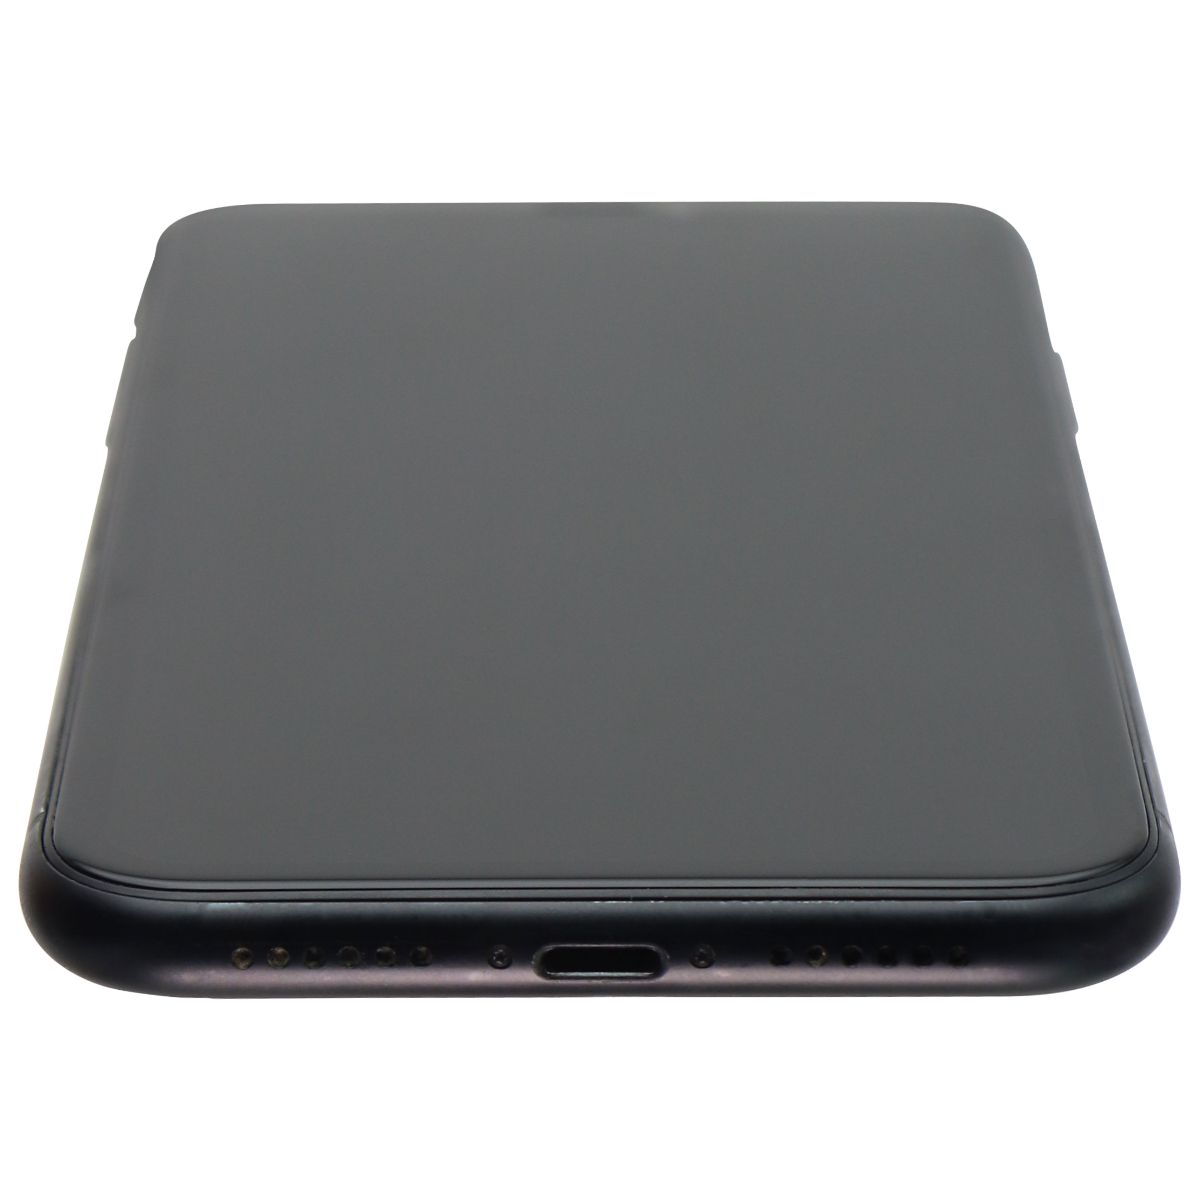 Apple iPhone XR (6.1-inch)(A2106) Unlocked - 128GB / Black - Bad Face ID*